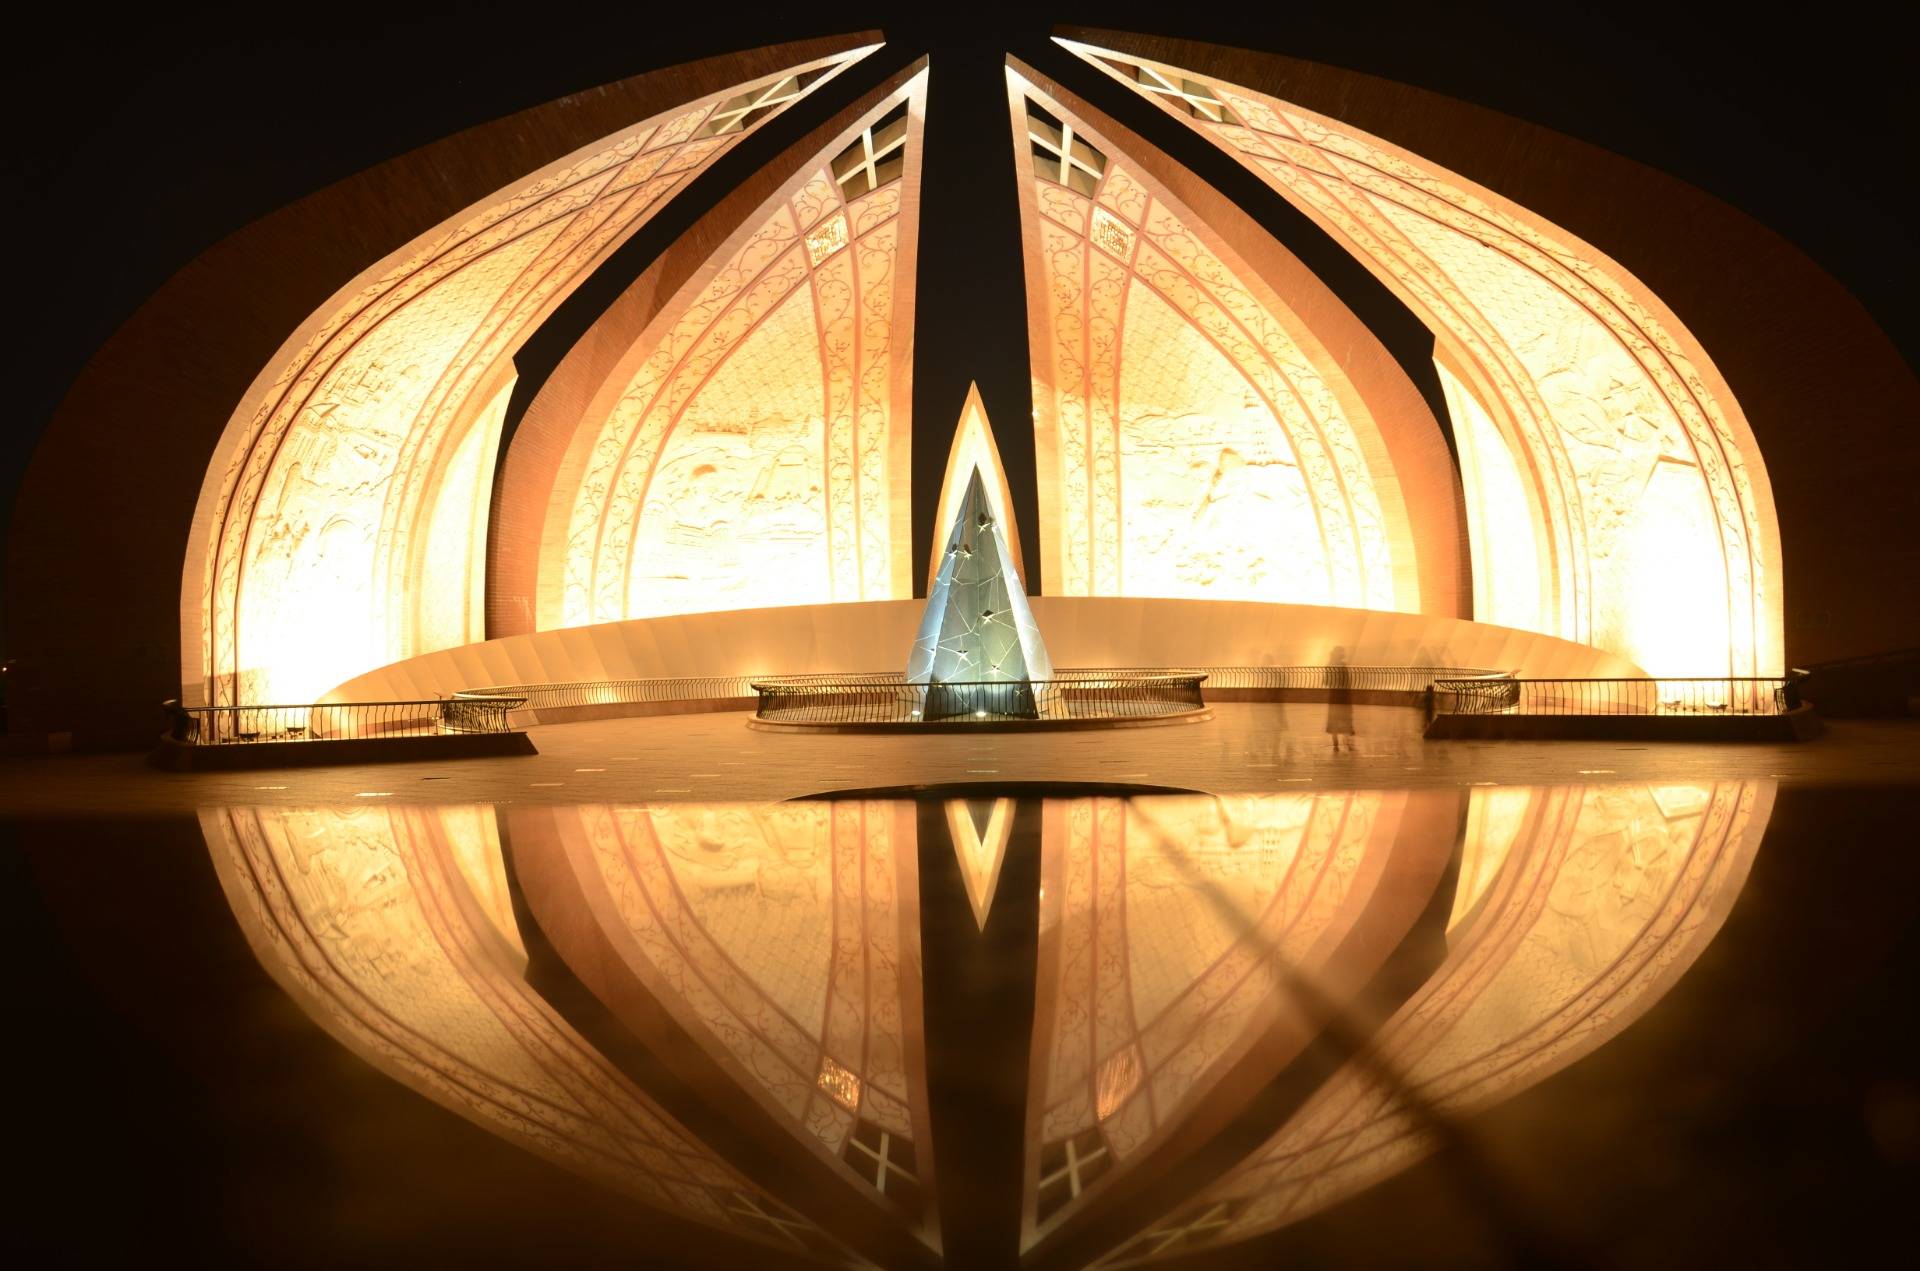 The Stunning Pakistan Monument in Islamabad